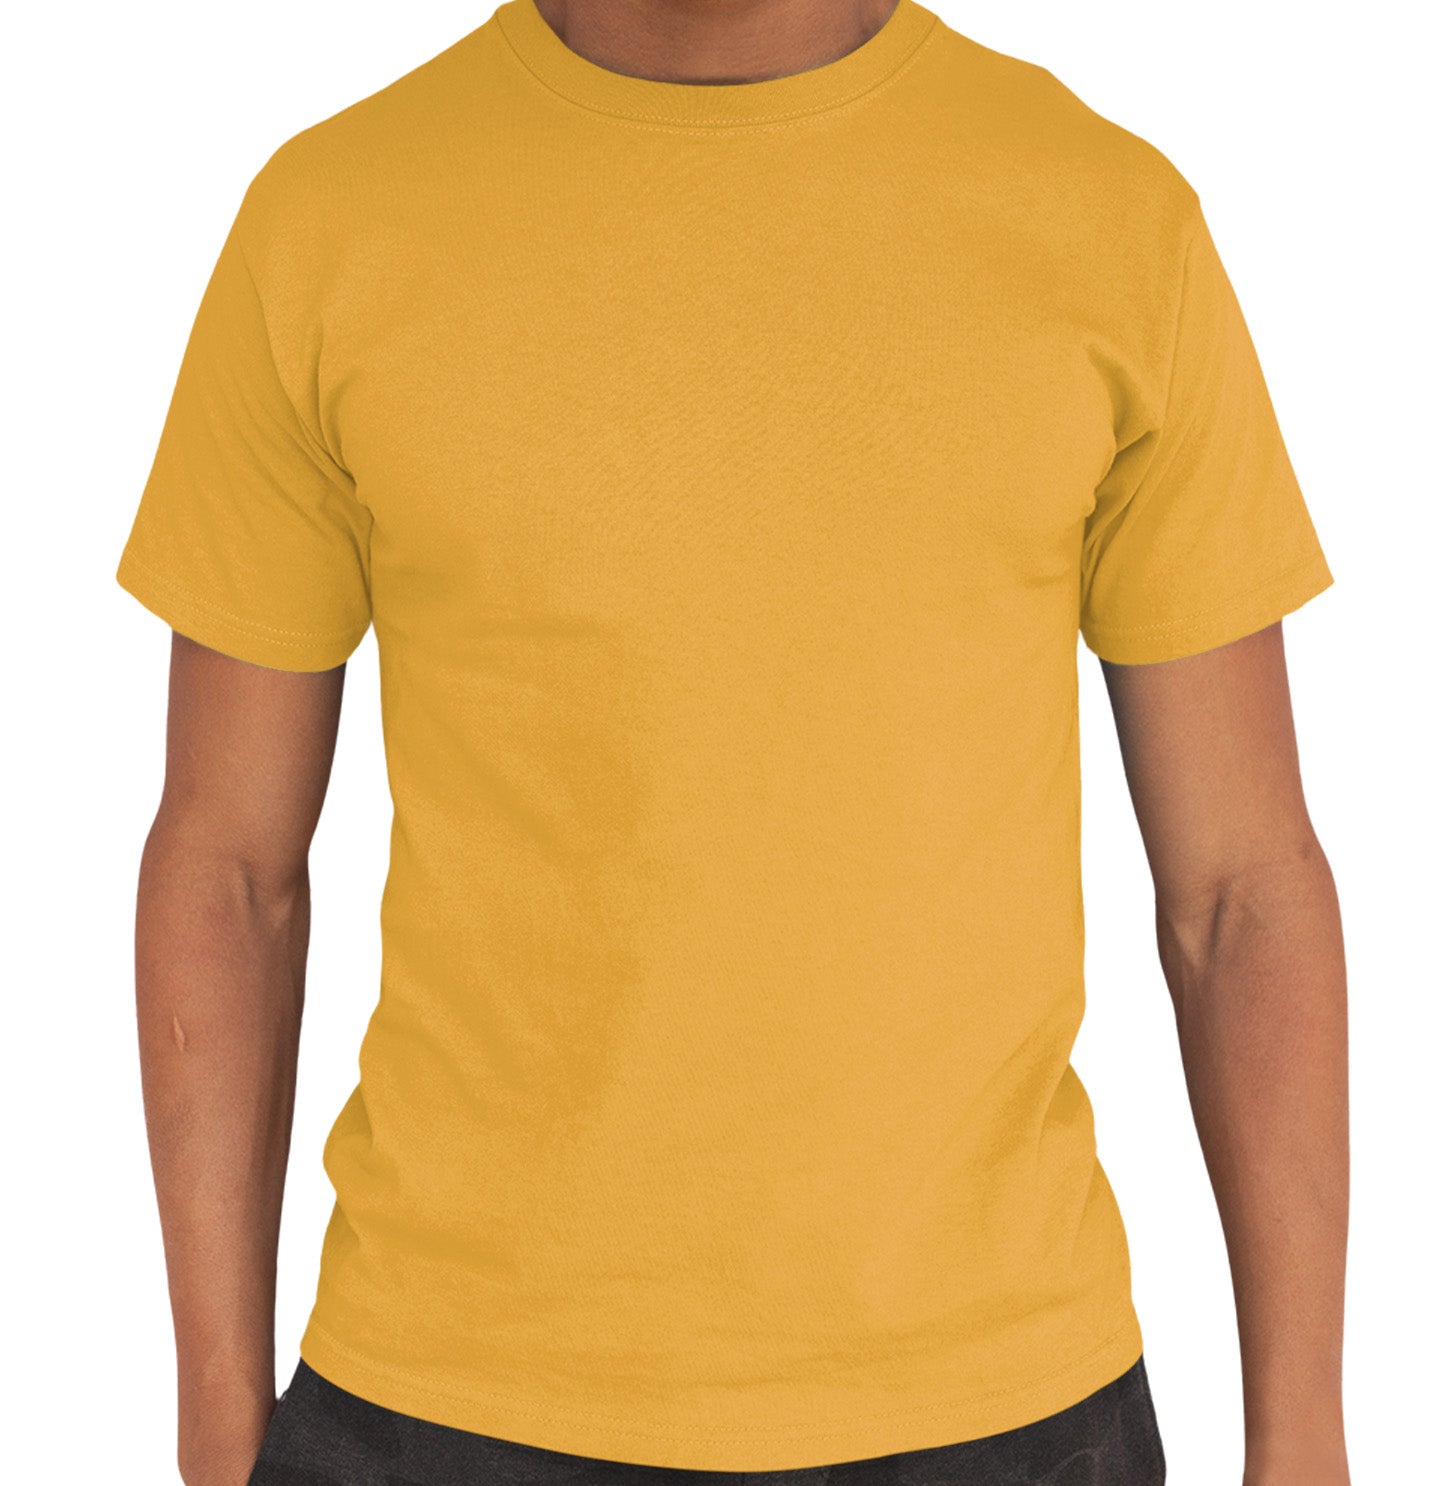 Golden Retriever Mom or Dad Sport Arch - Personalized Custom Adult Unisex T-Shirt